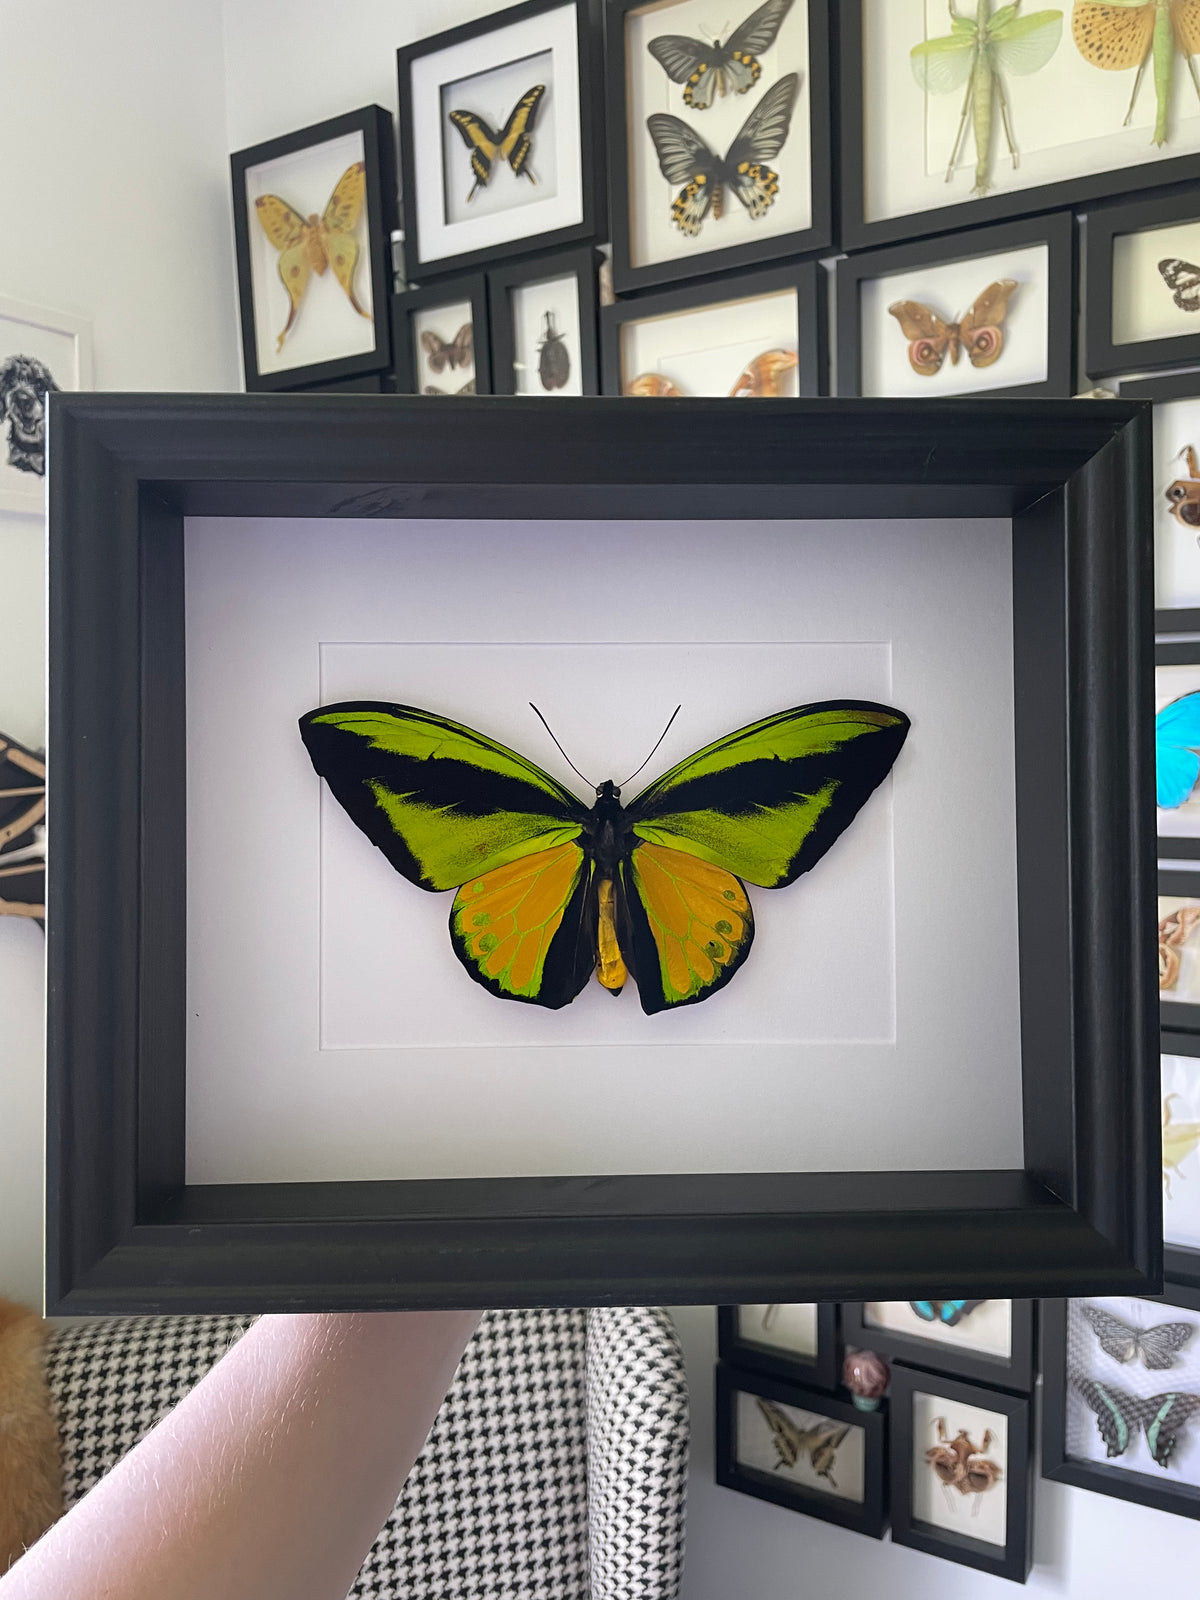 Goliath Birdwing / Ornithoptera Goliath in a larger frame